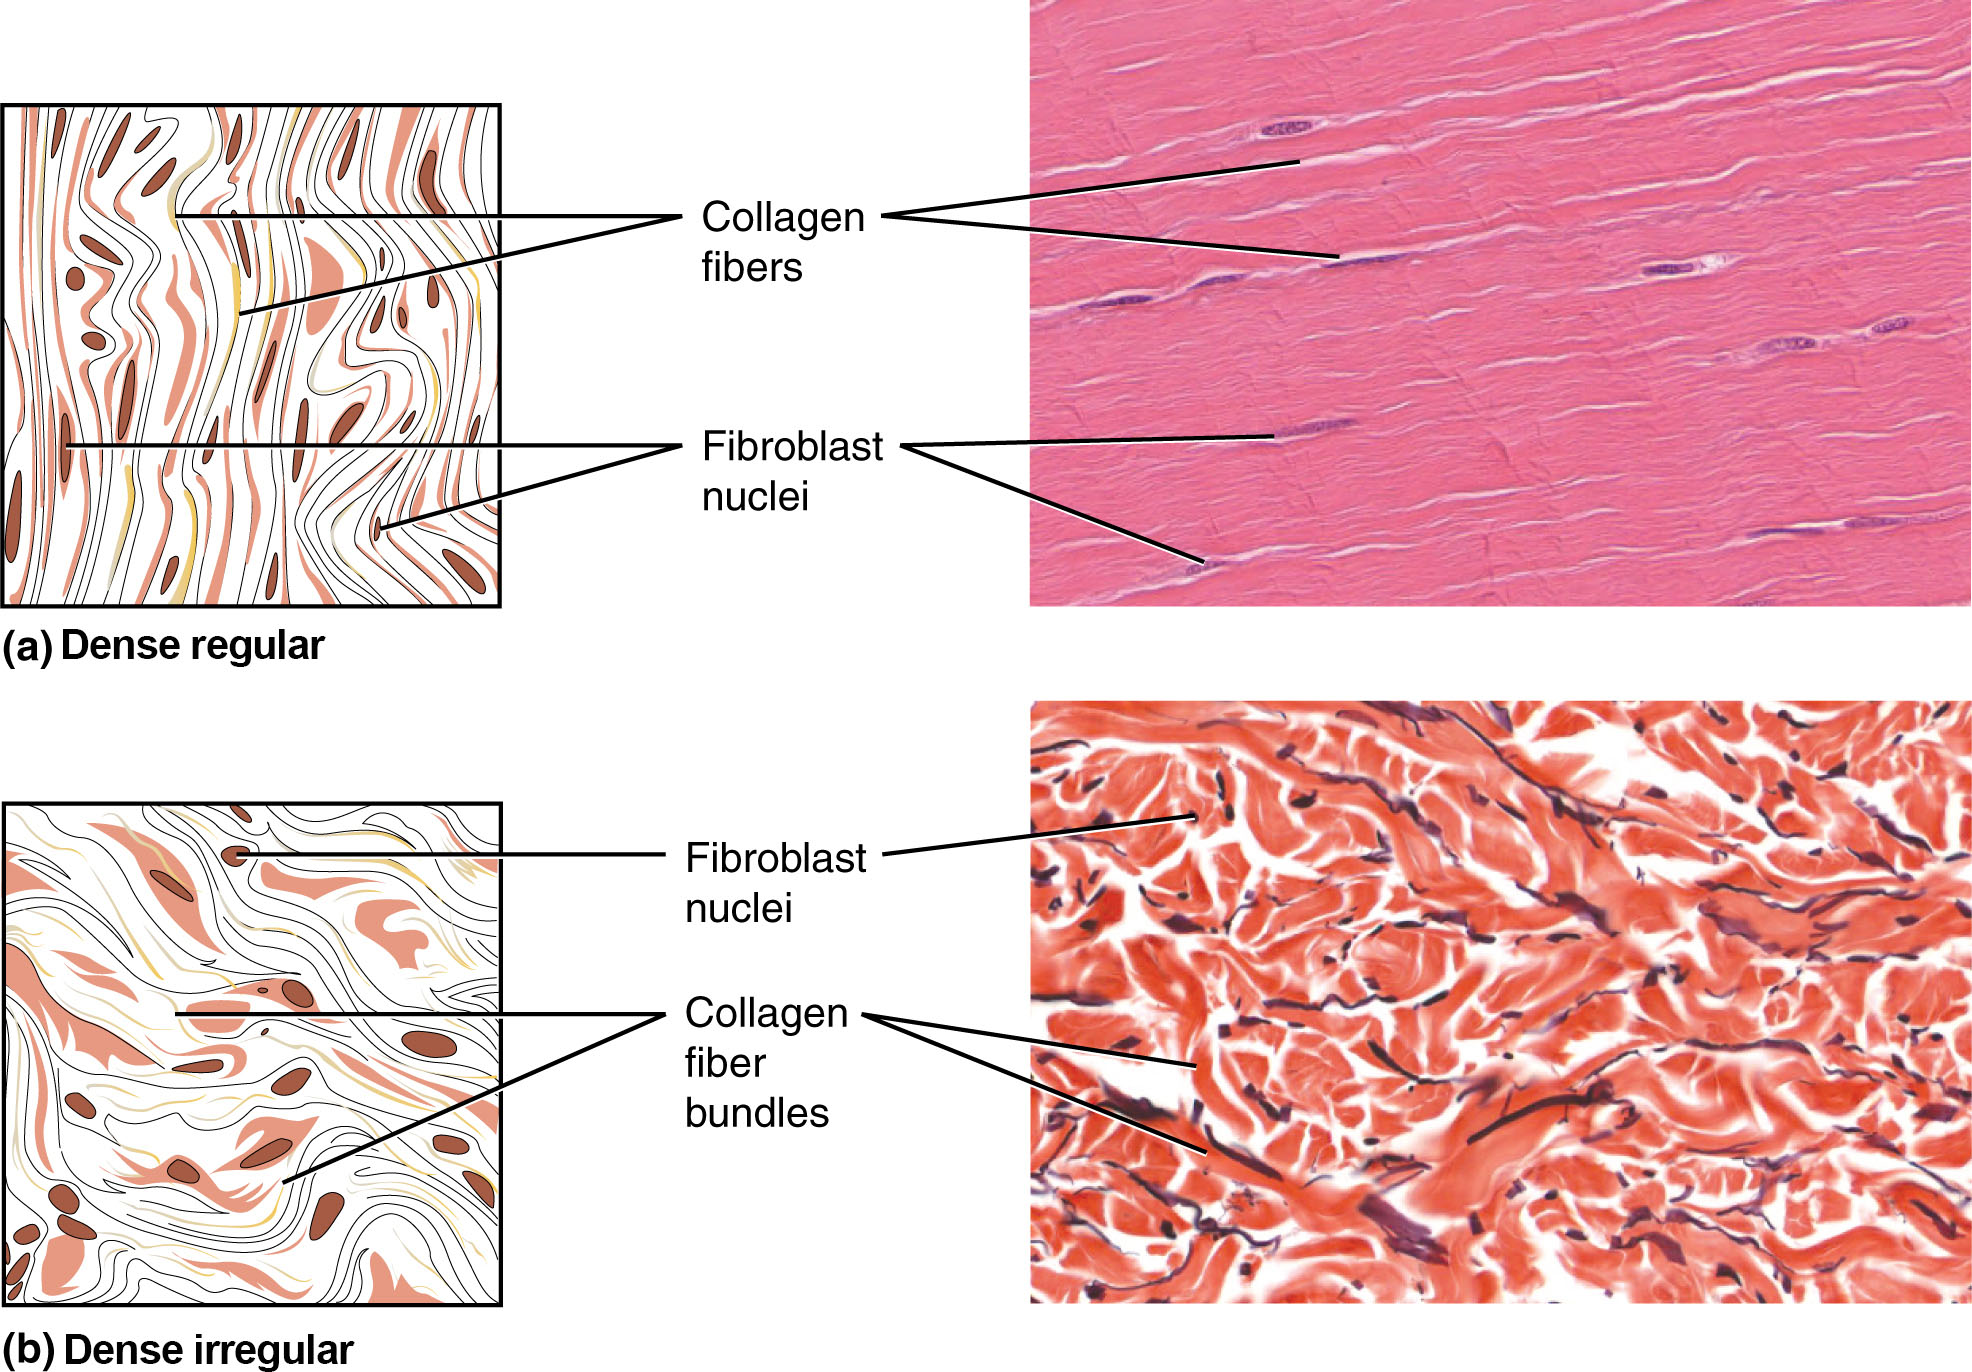 major tissue types